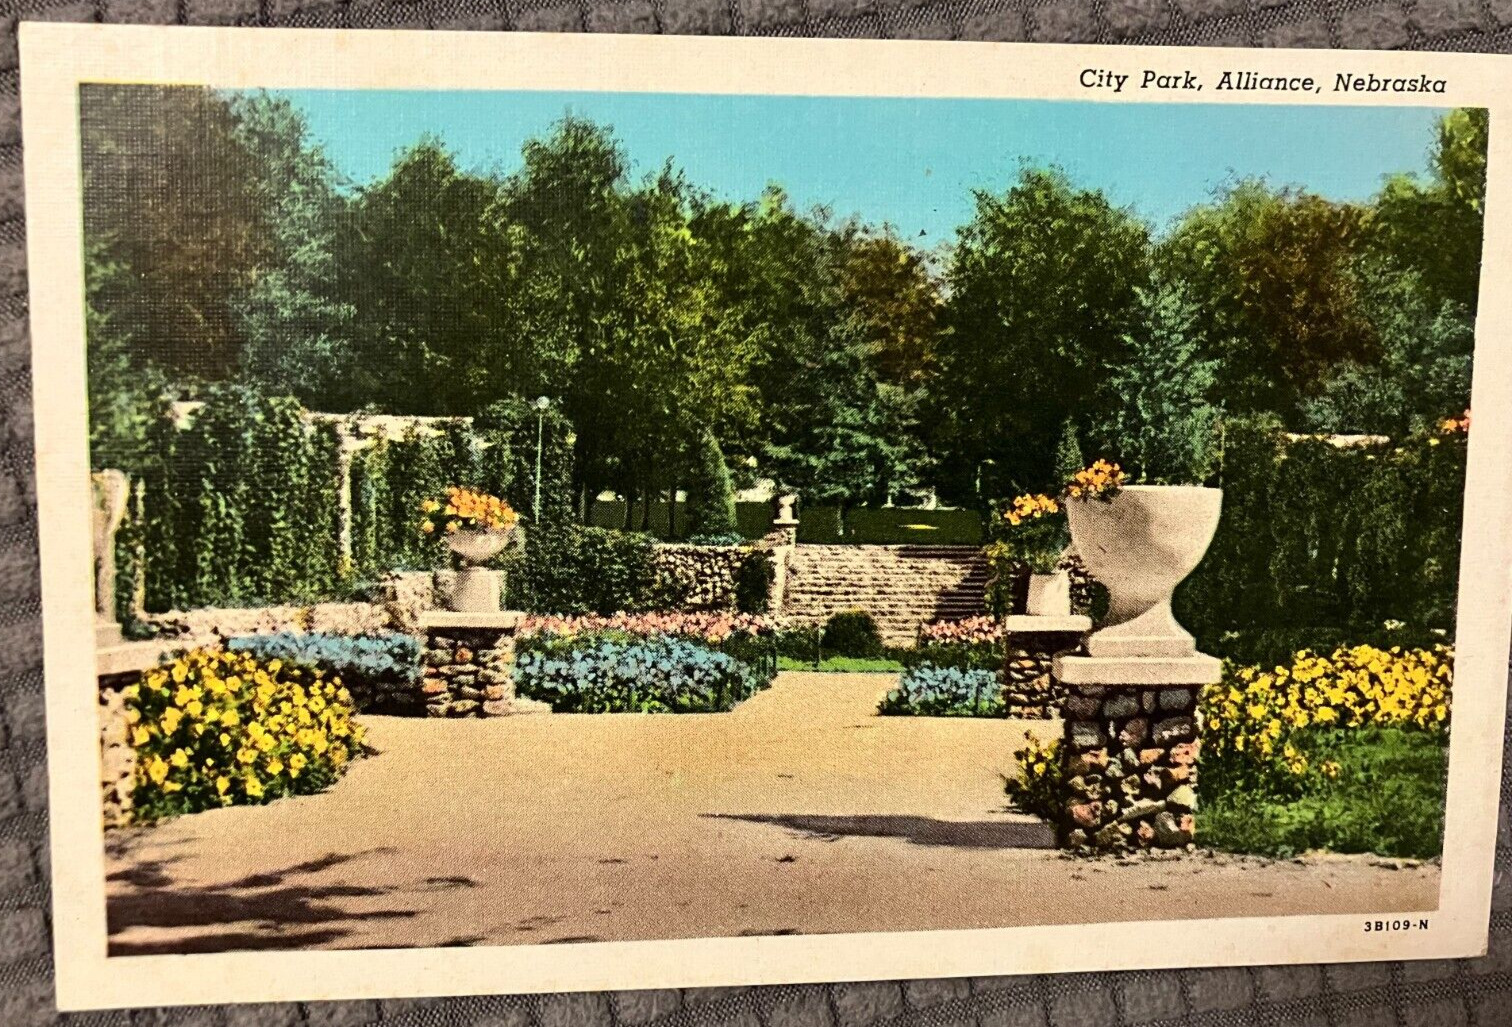 Antique Postcard - Flower Gardens in the City Park in Alliance, Nebraska